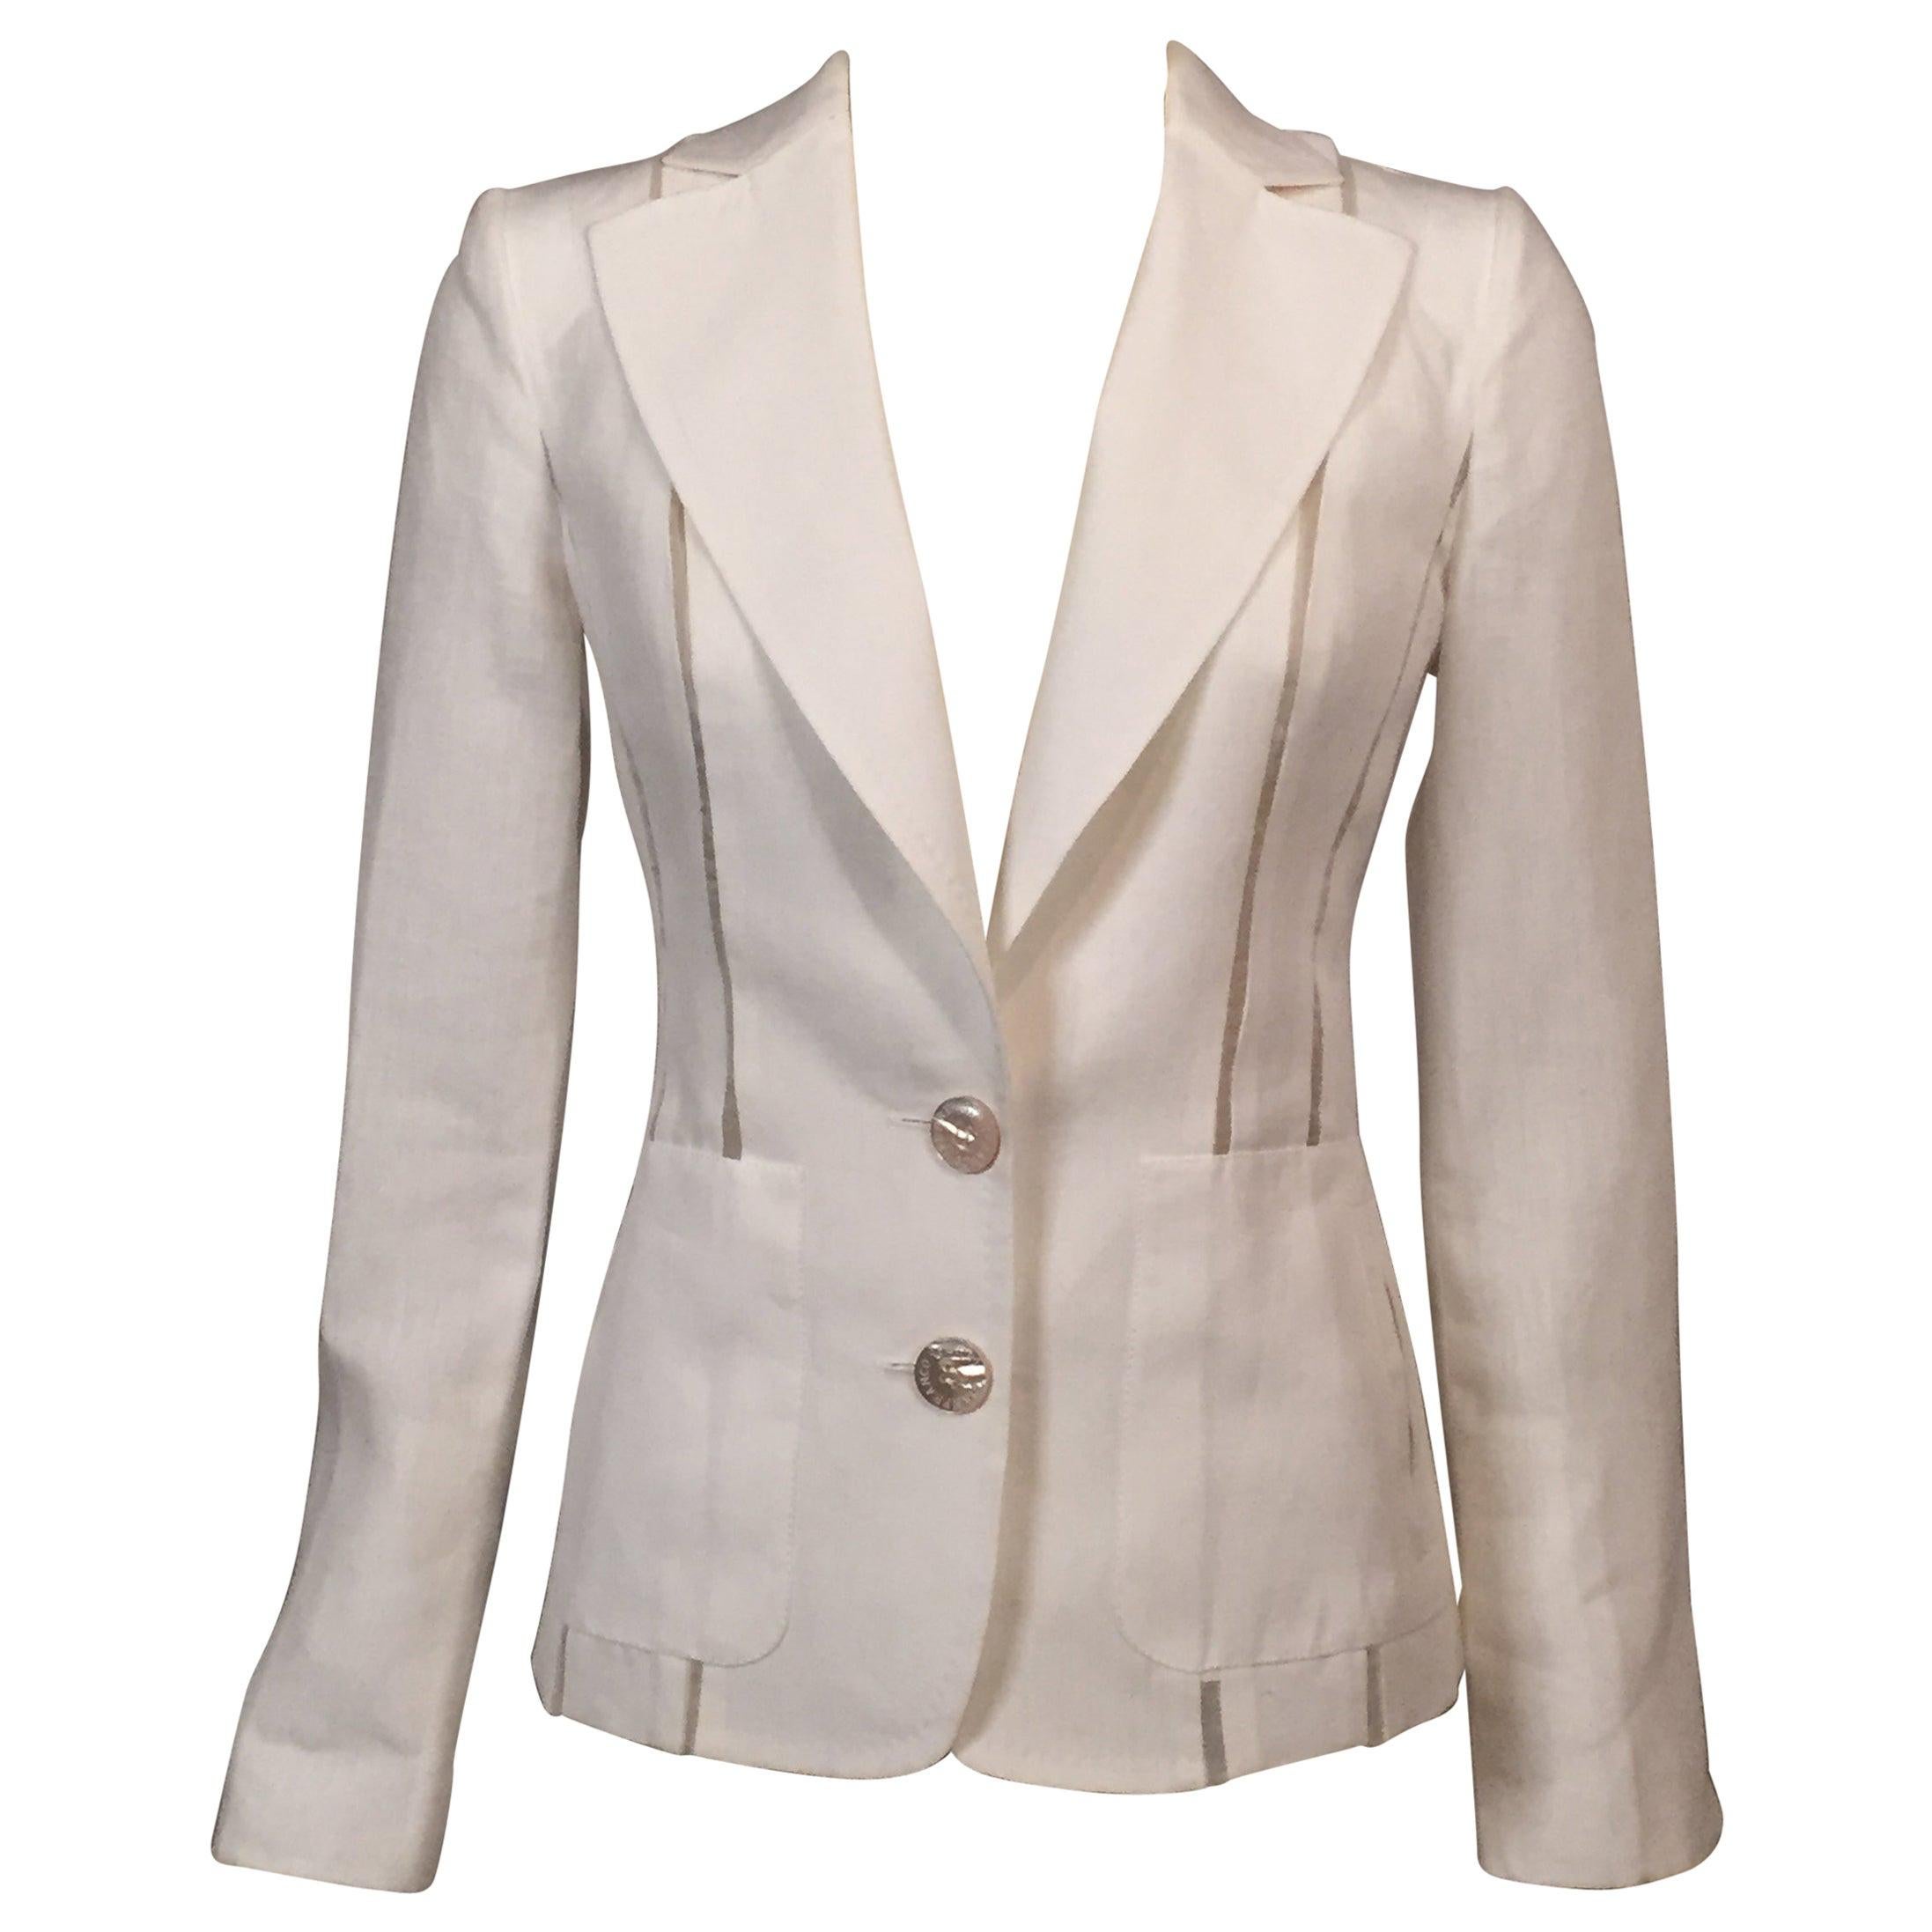 Gianfranco Ferre White Linen Jacket with Sheer Silk Organza Panels